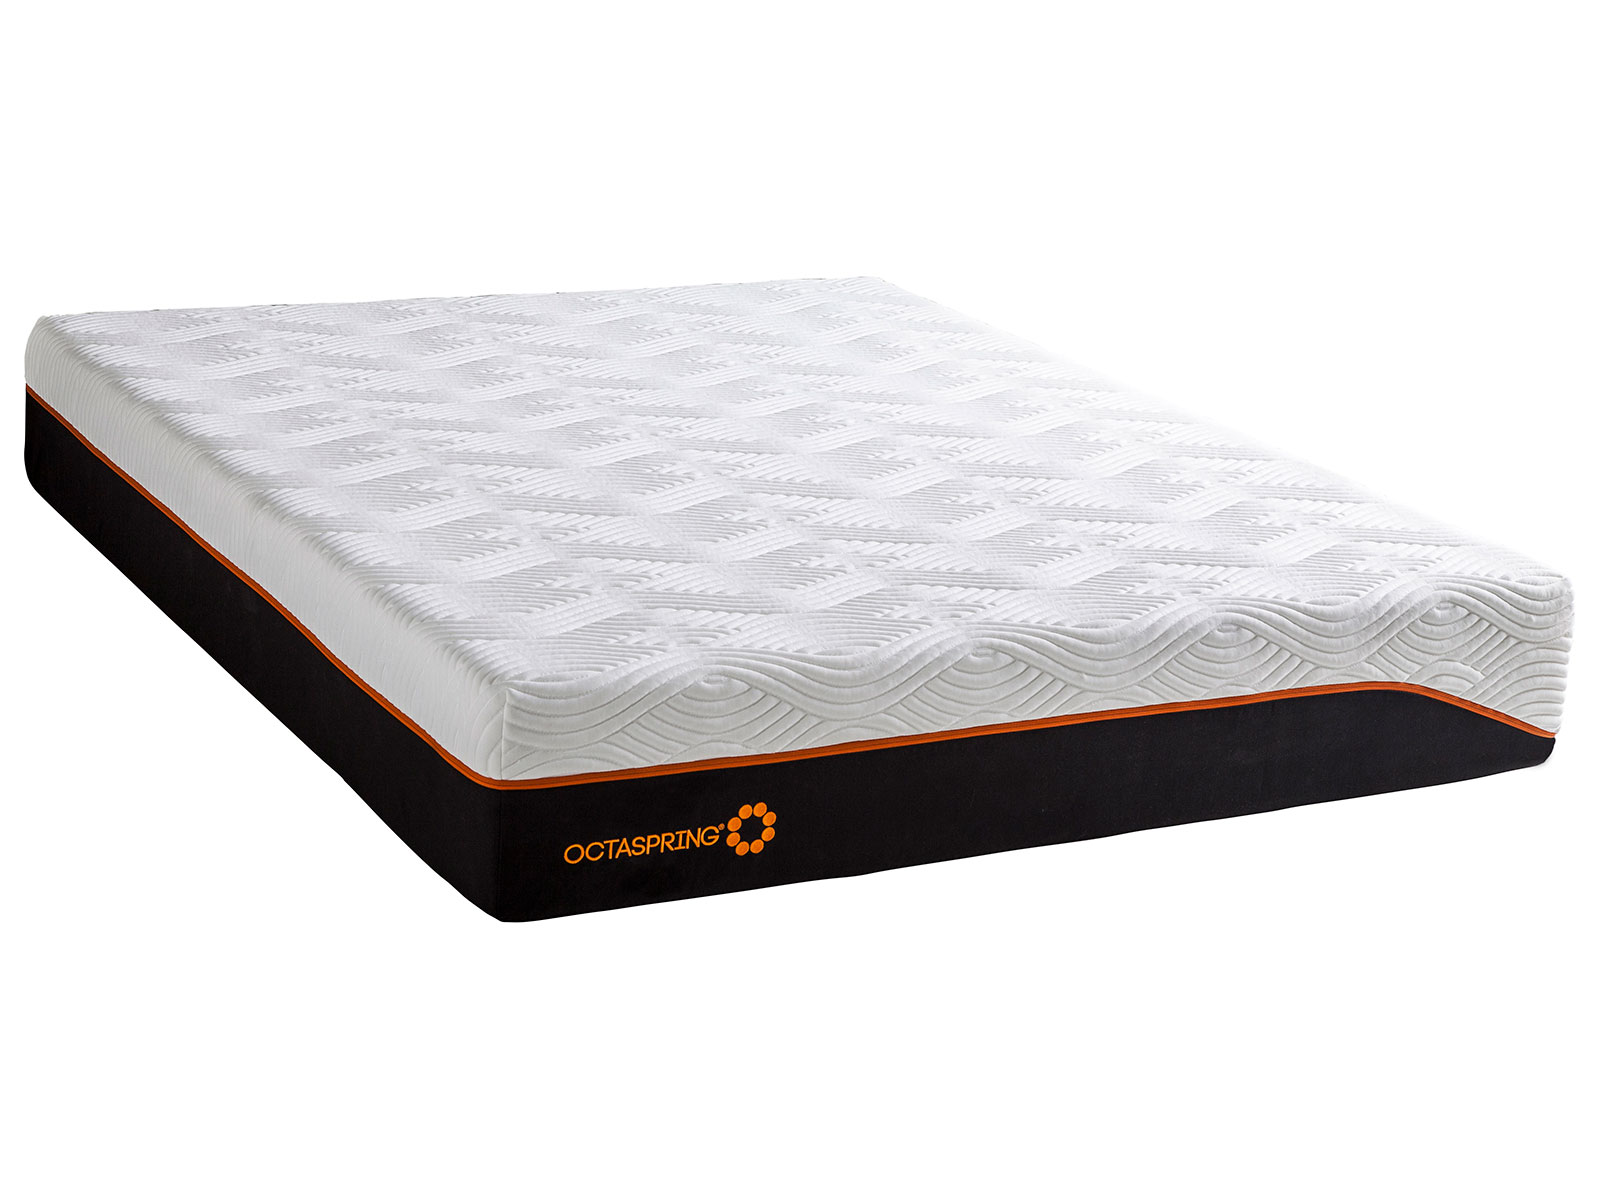 octaspring hybrid plus mattress